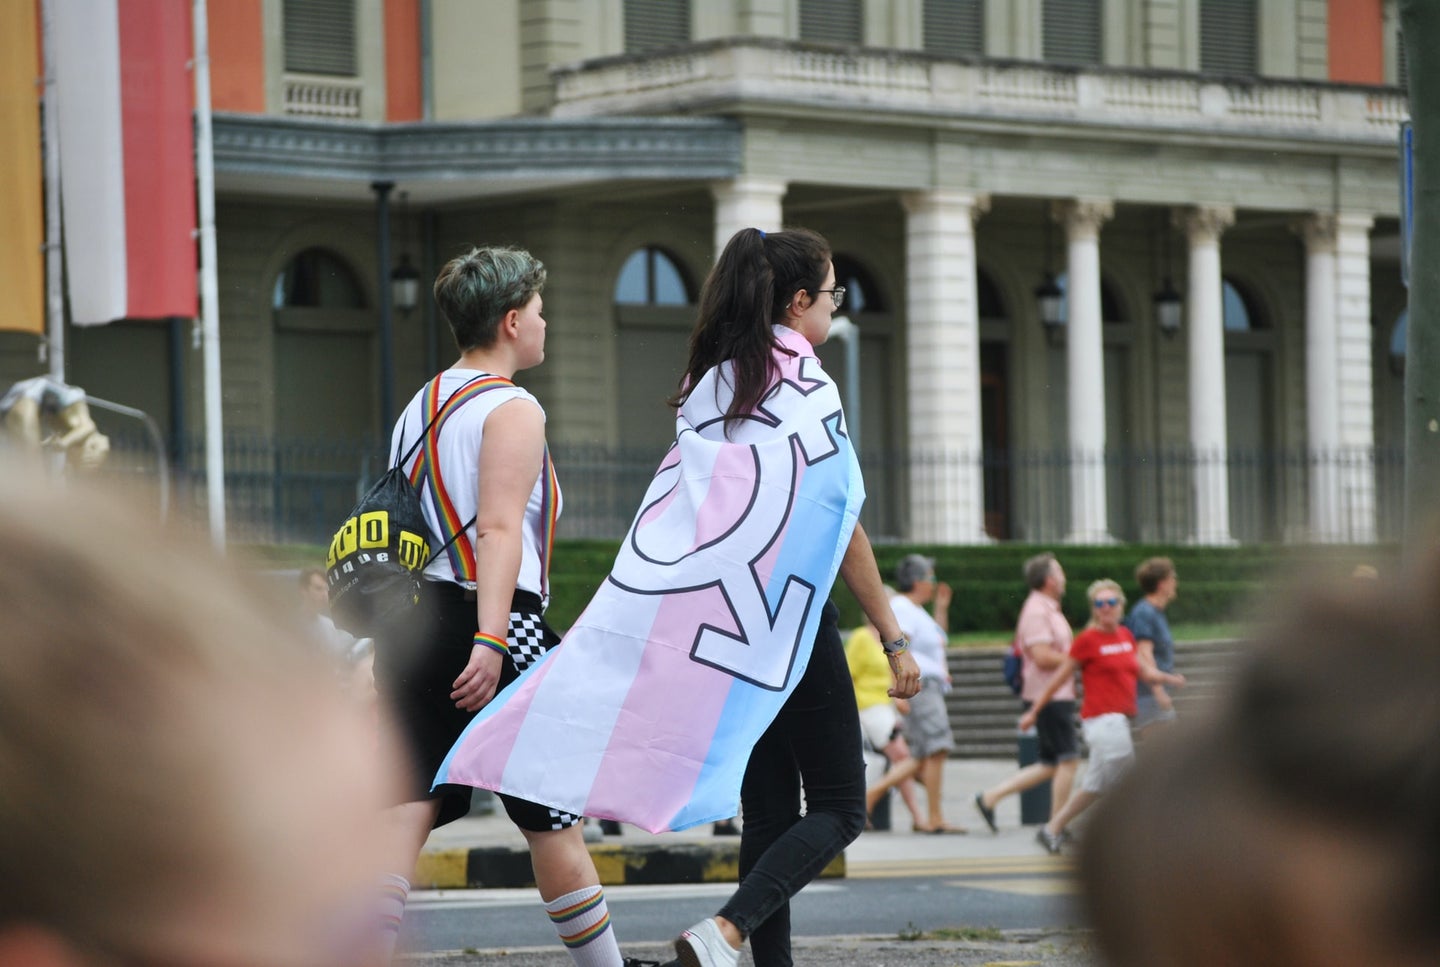 Teen with trans flag over shoulders walking with friend in rainbow pride suspenders